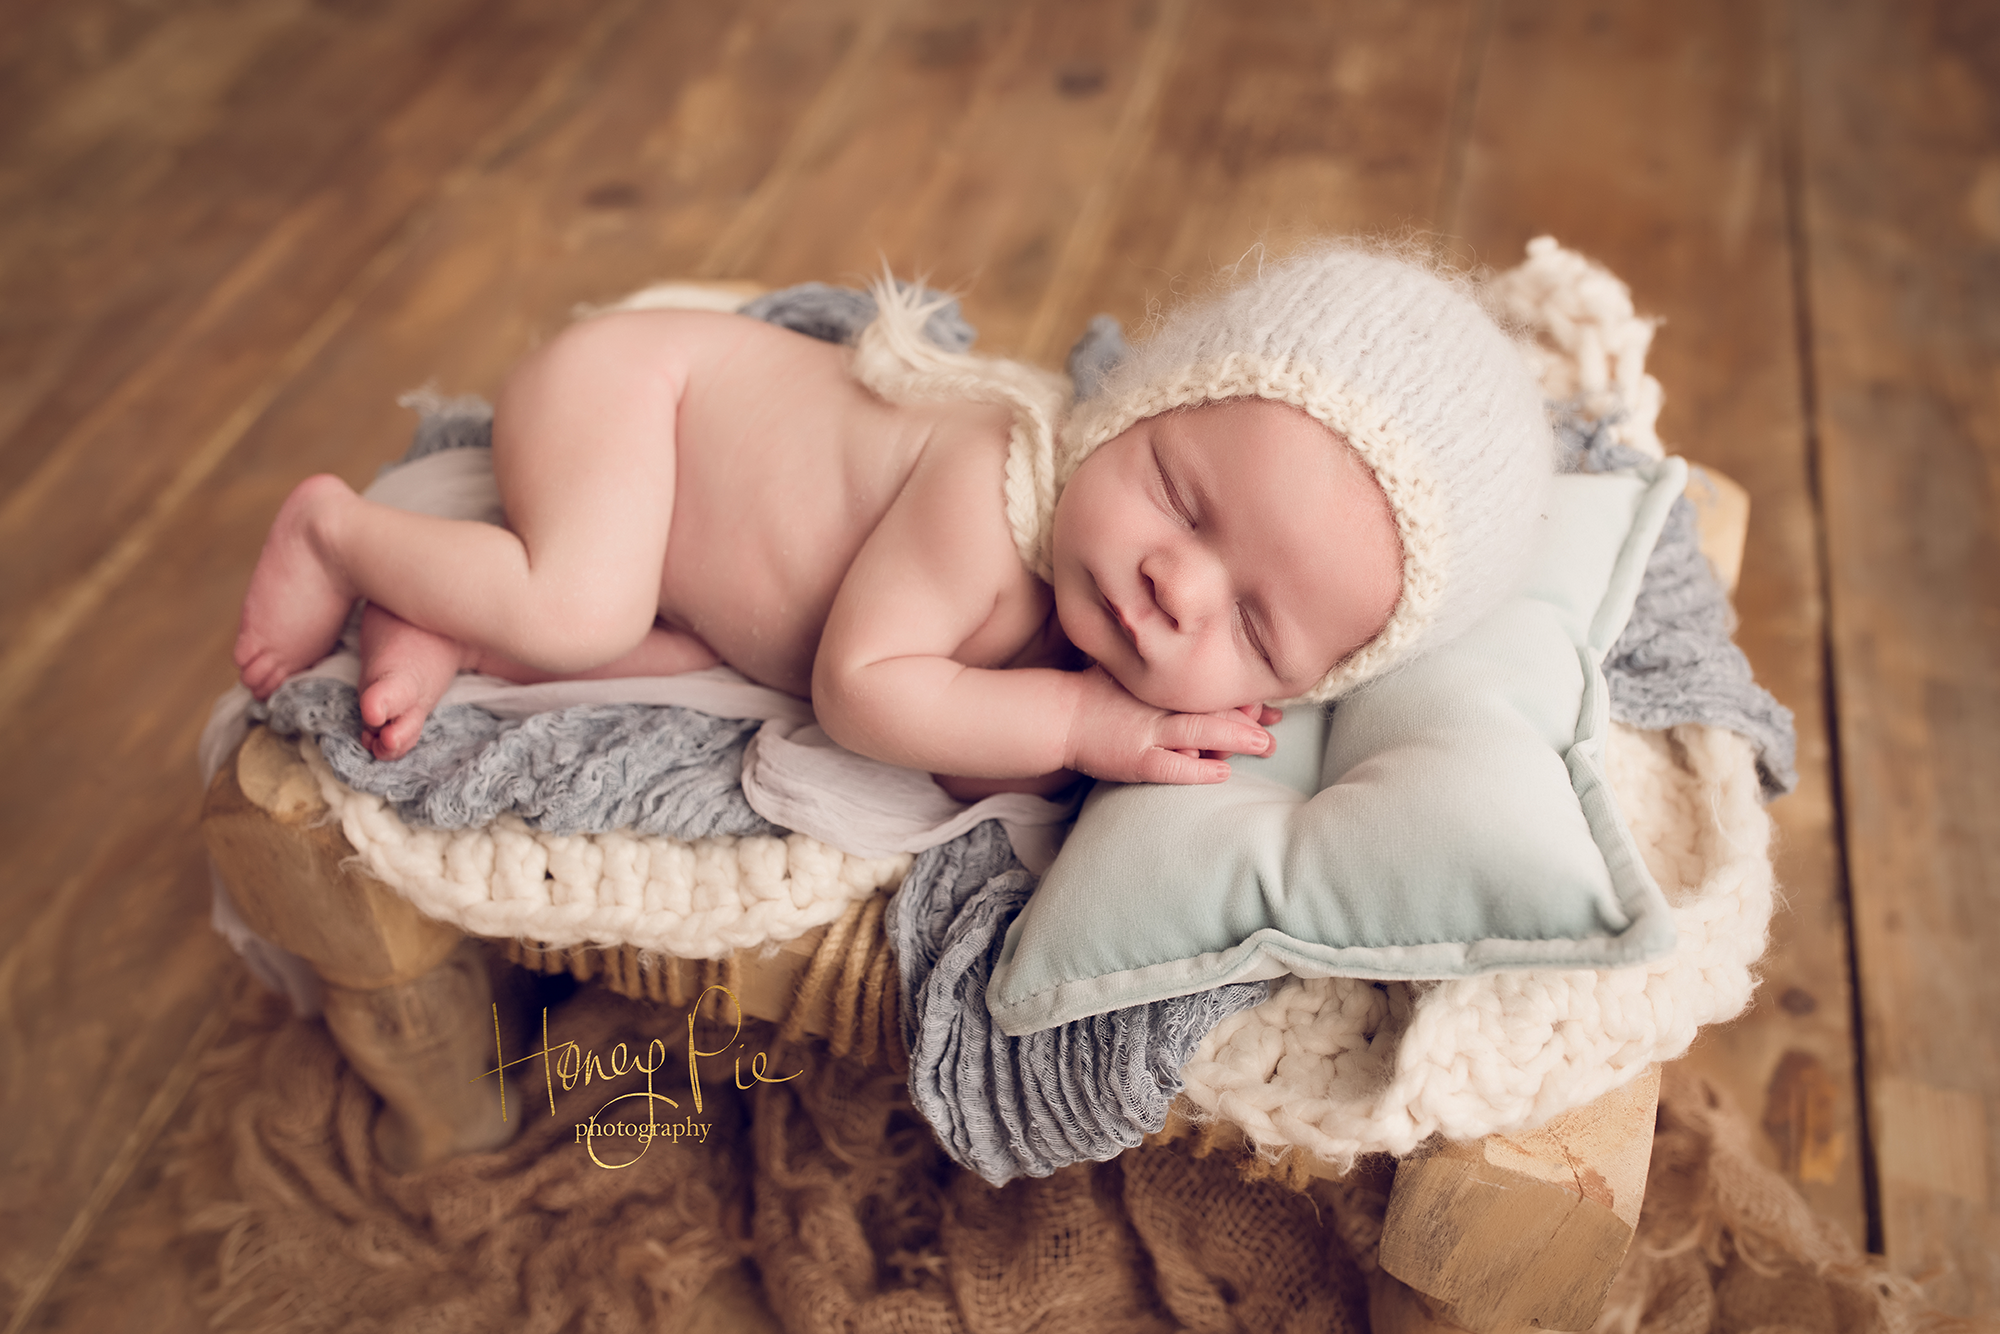 Newborn baby boy fast asleep on a baby blue bed